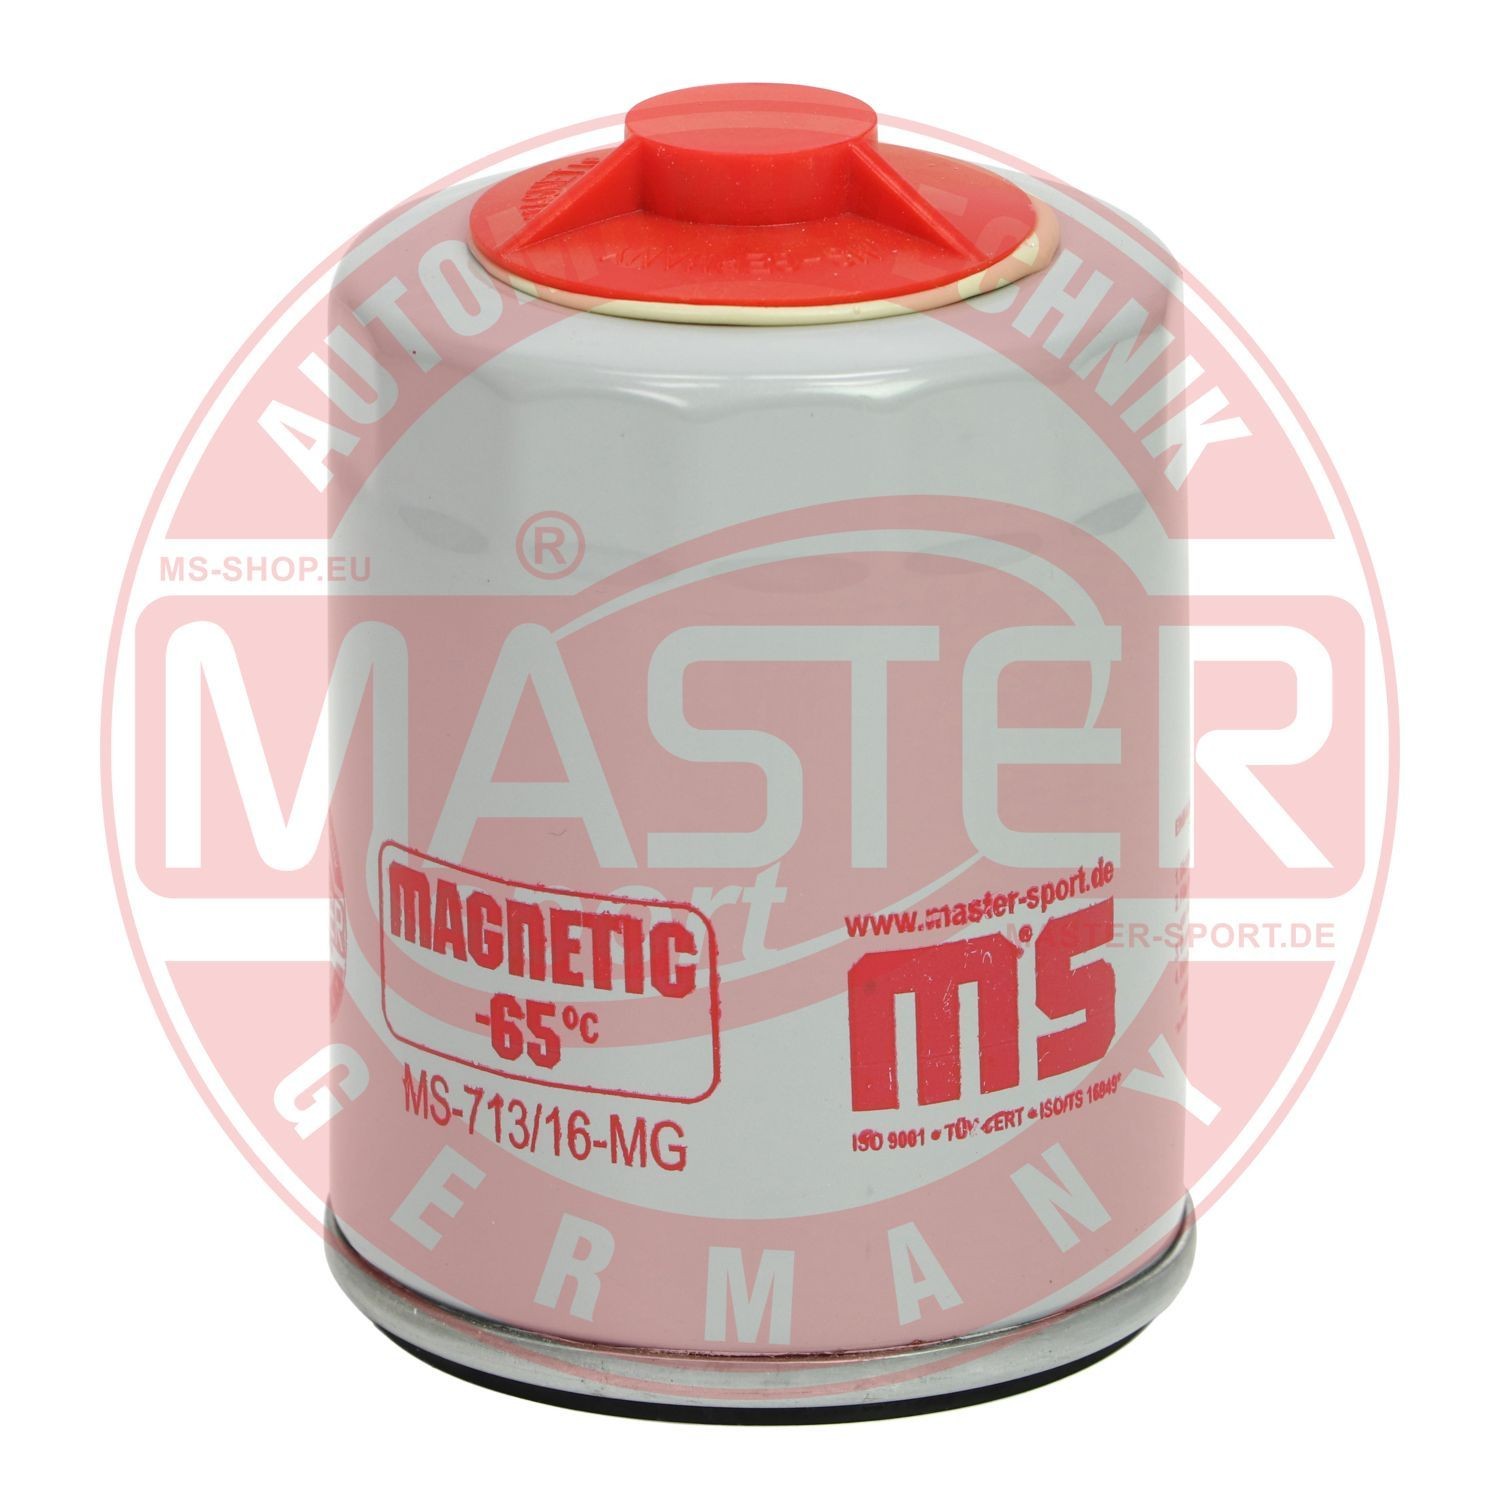 440713161 MASTER-SPORT M 20 X 1.5, with one anti-return valve, Filter Insert Inner Diameter 2: 62mm, Outer Diameter 2: 71mm, Ø: 76mm, Height: 100mm Oil filters 713/16-MG-OF-PCS-MS buy